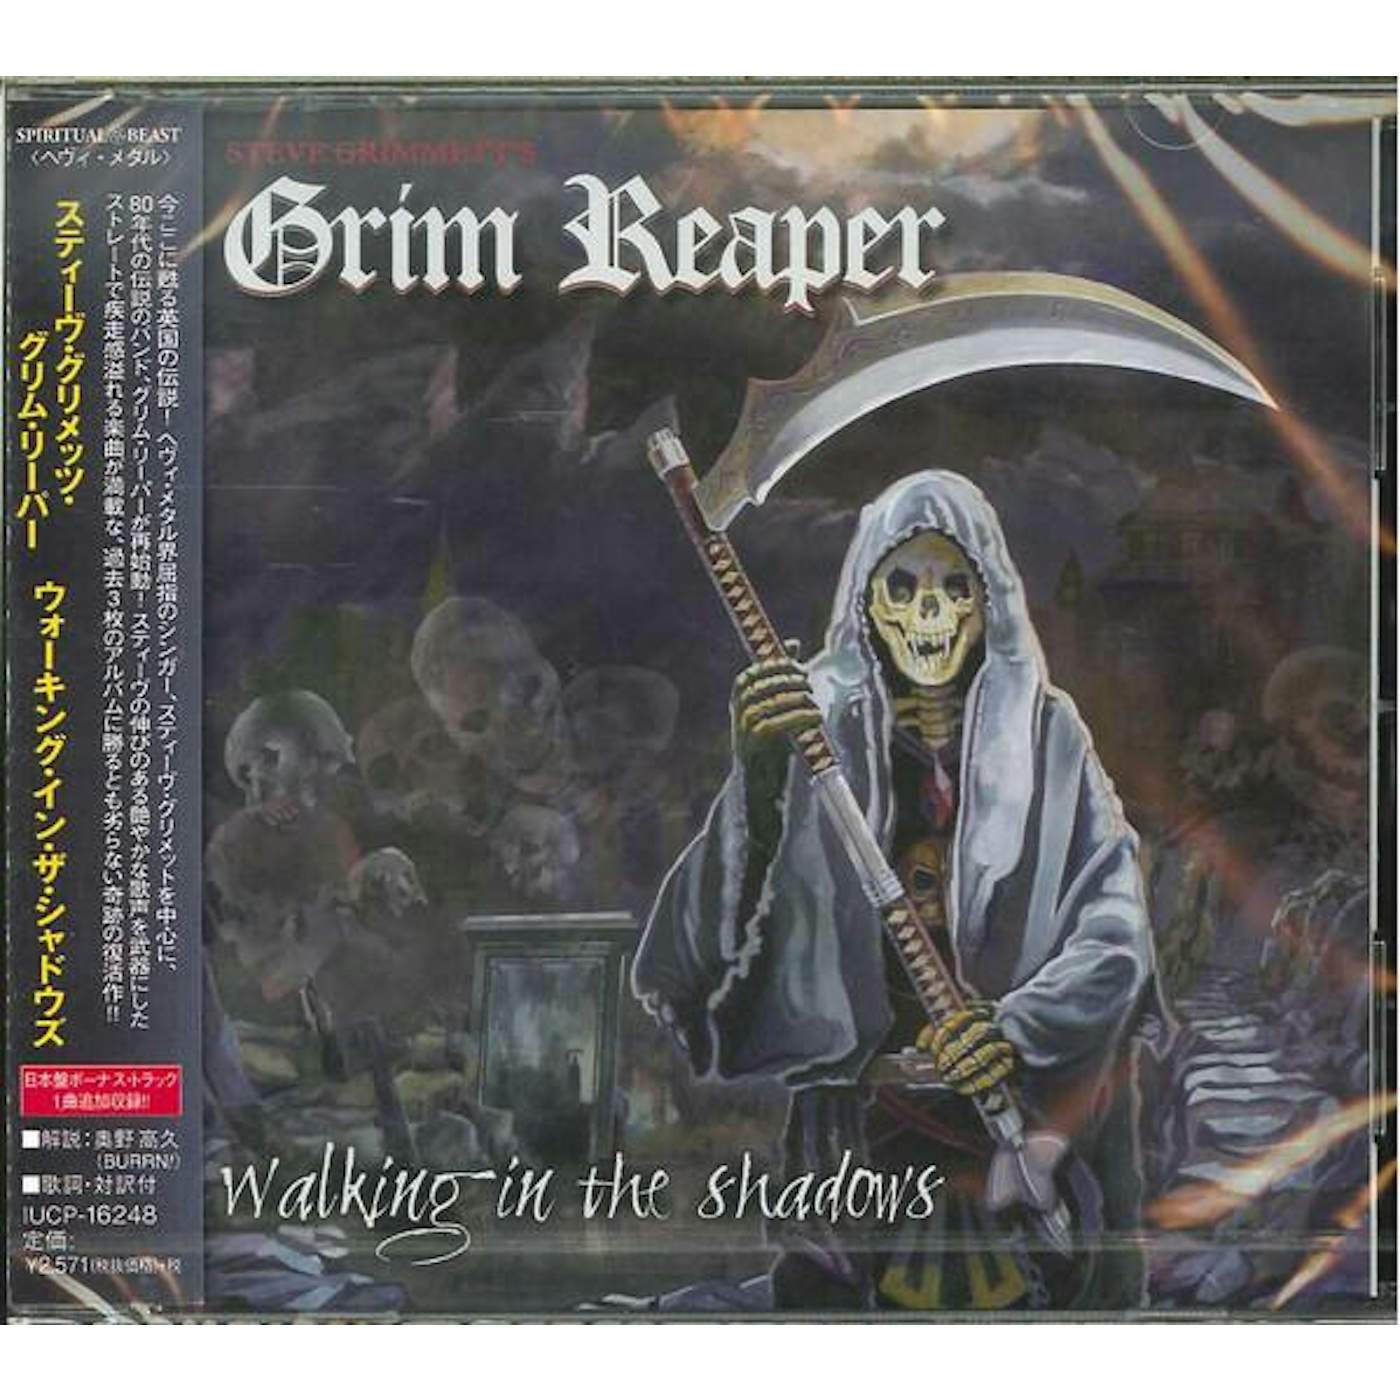 Steve Grimmett's Grim Reaper WALKING IN THE SHADOWS CD